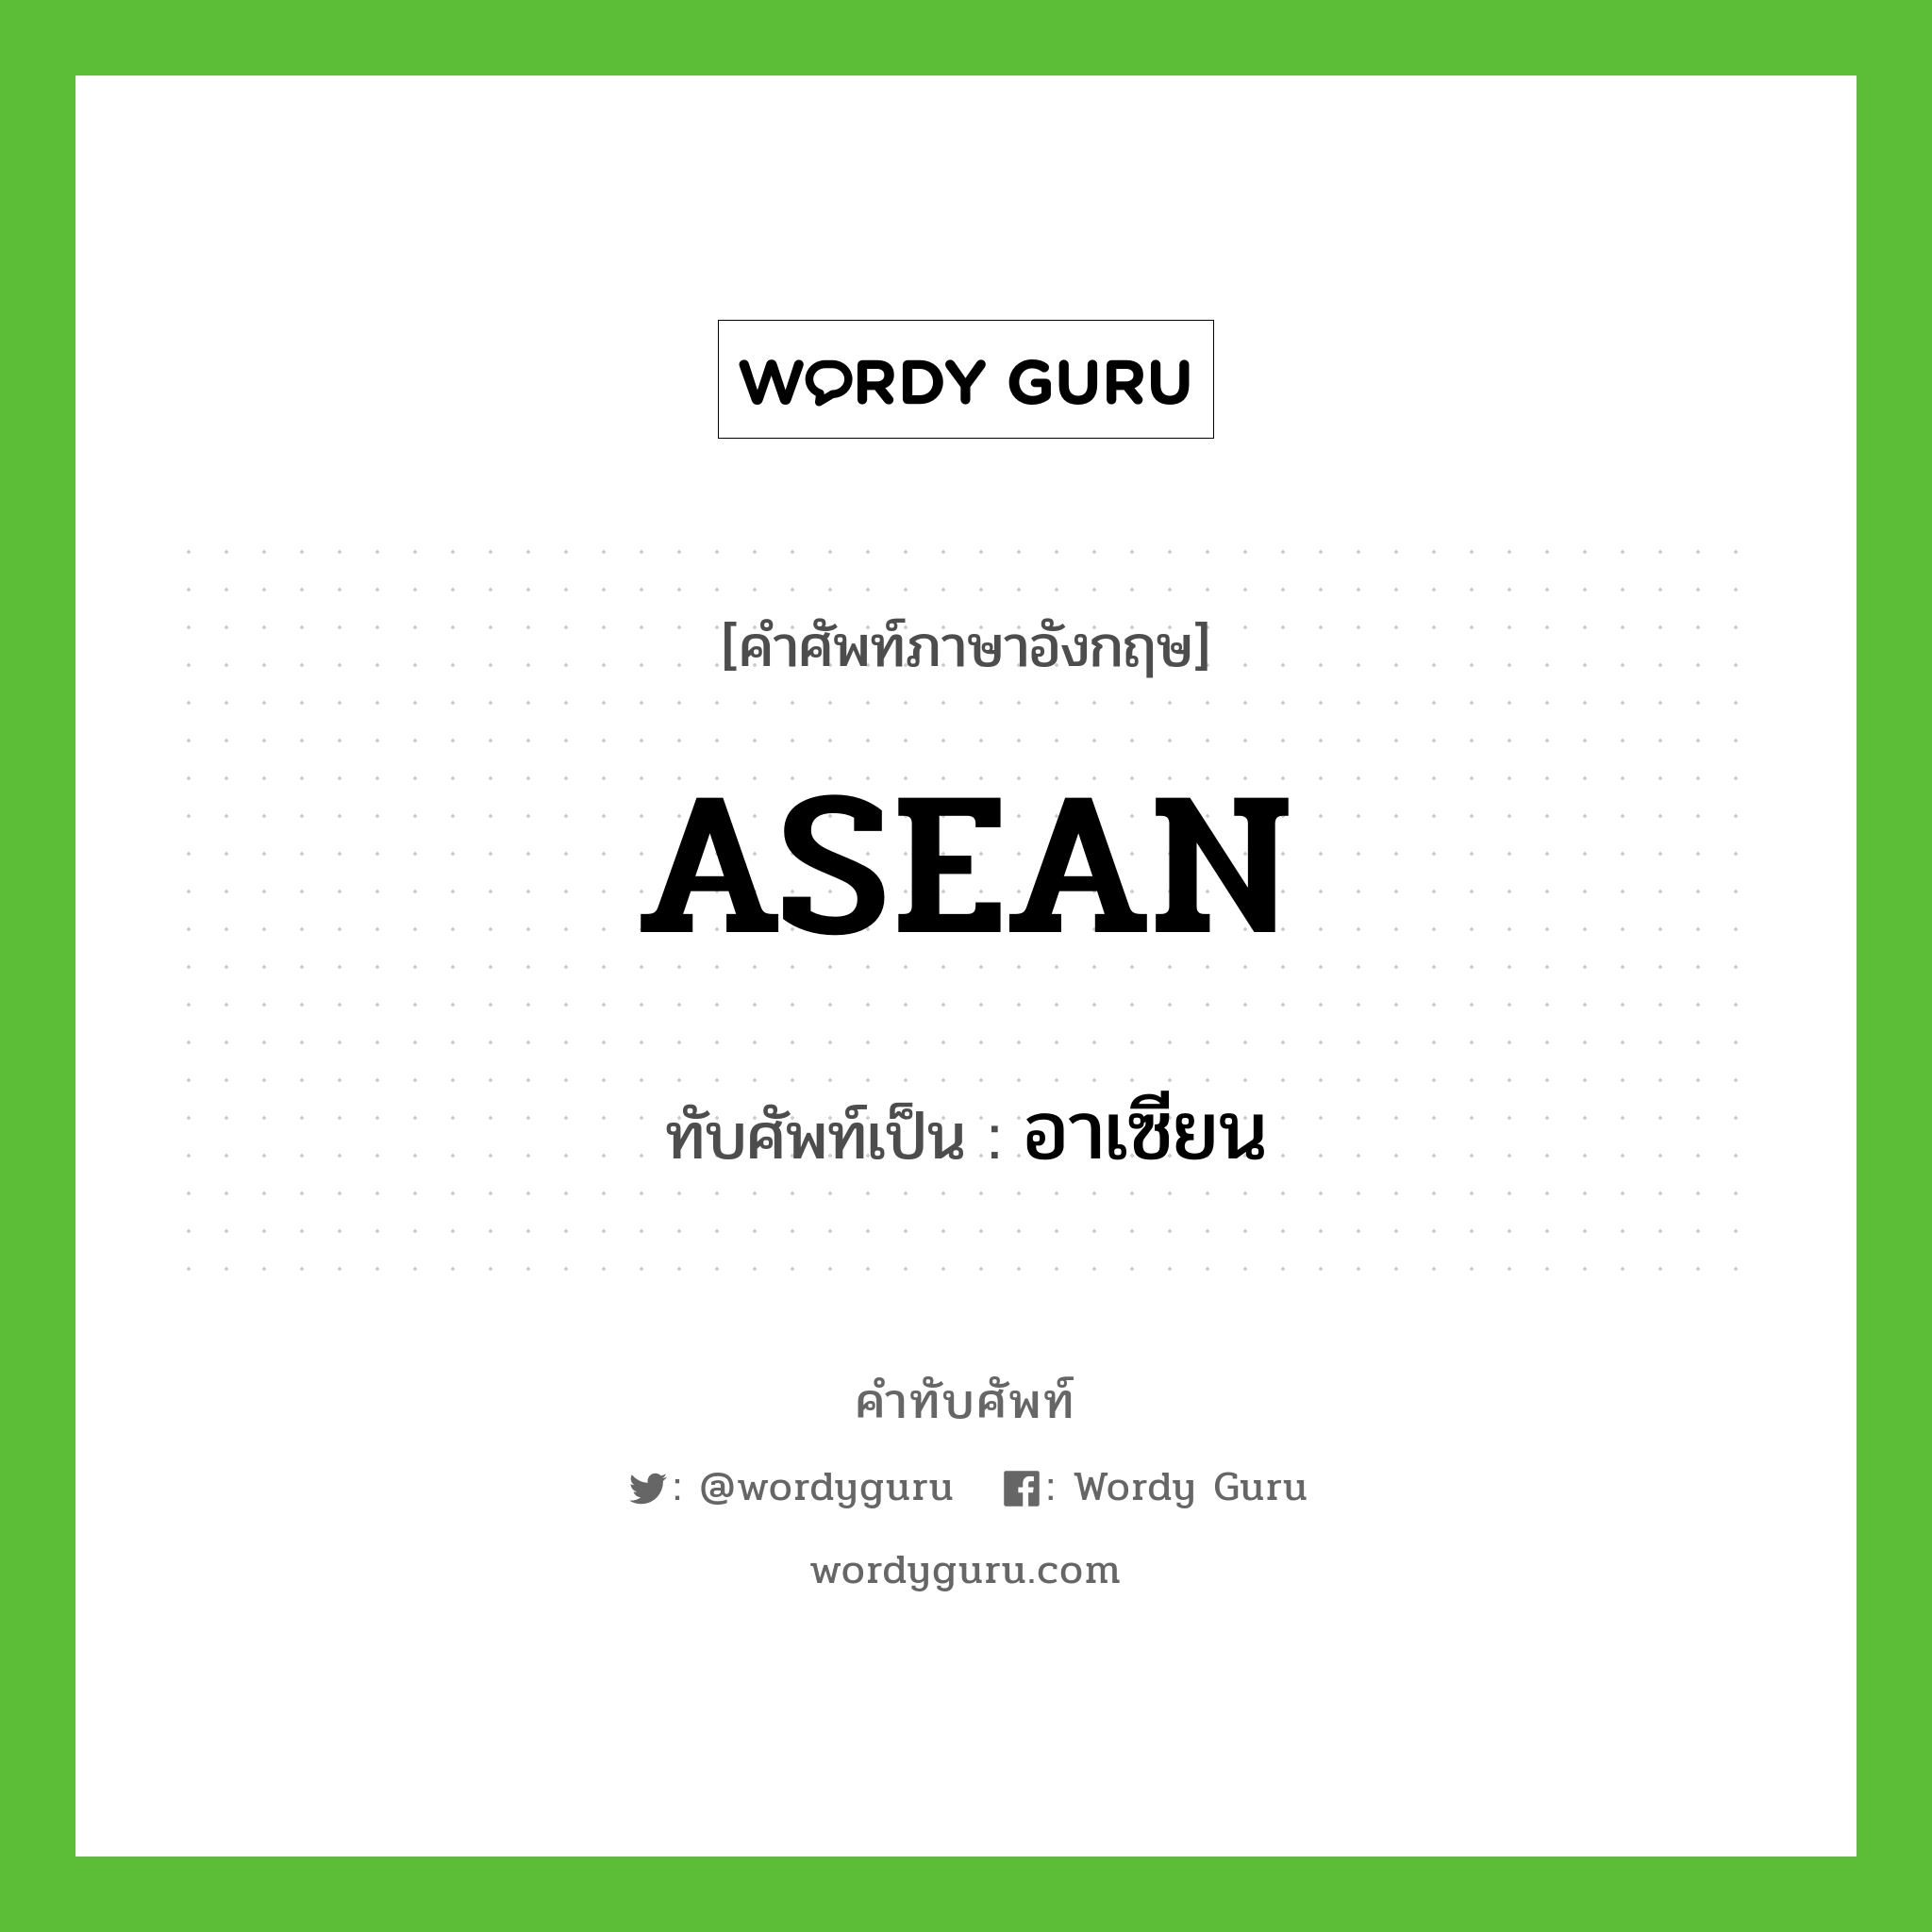 ASEAN เขียนเป็นคำไทยว่าอะไร?, คำศัพท์ภาษาอังกฤษ ASEAN ทับศัพท์เป็น อาเซียน